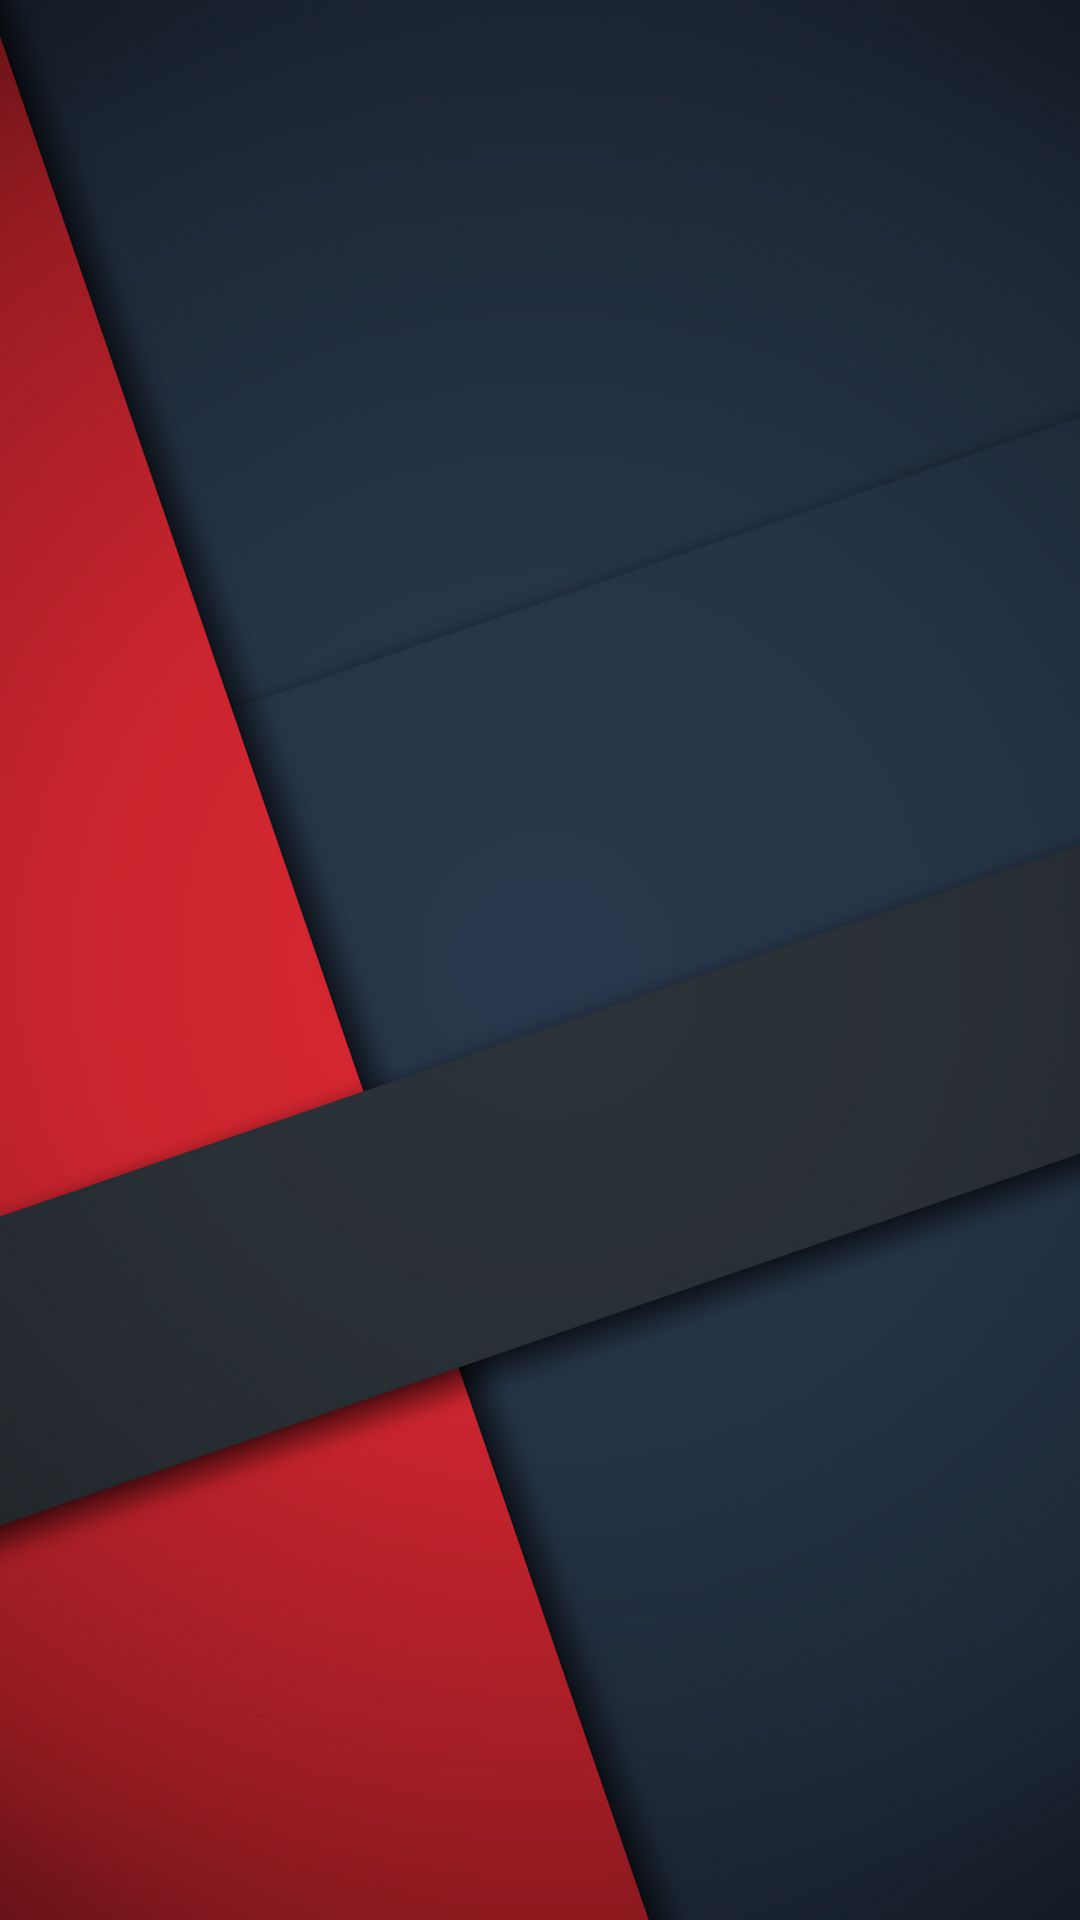 android material design wallpaper,red,blue,black,line,orange